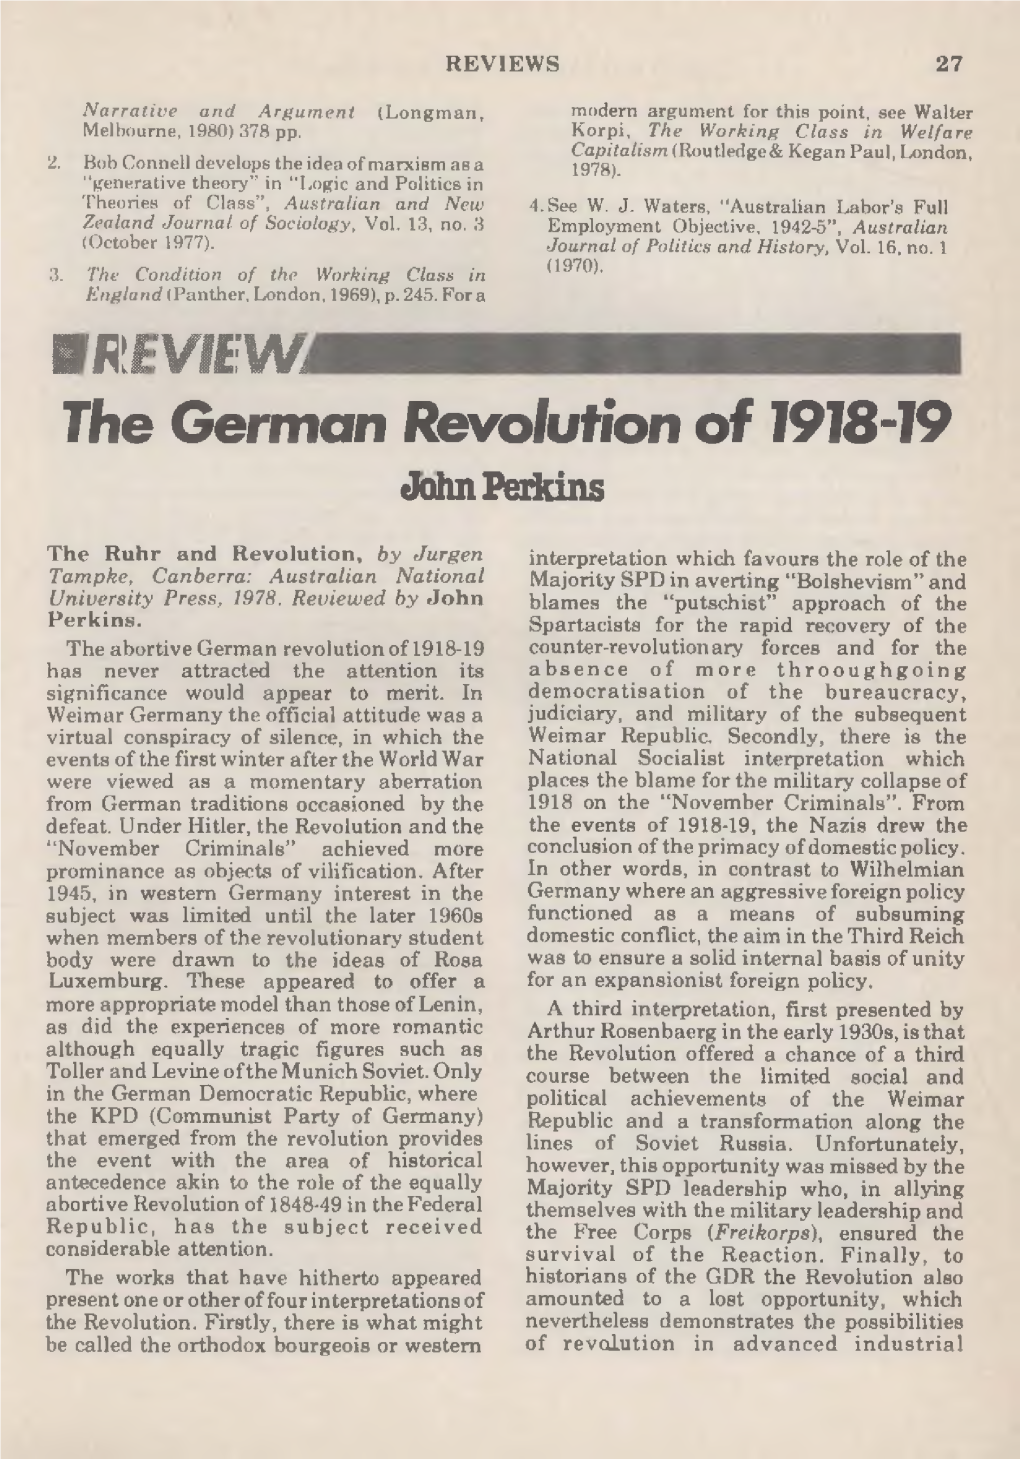 The German Revolution of 1918-19